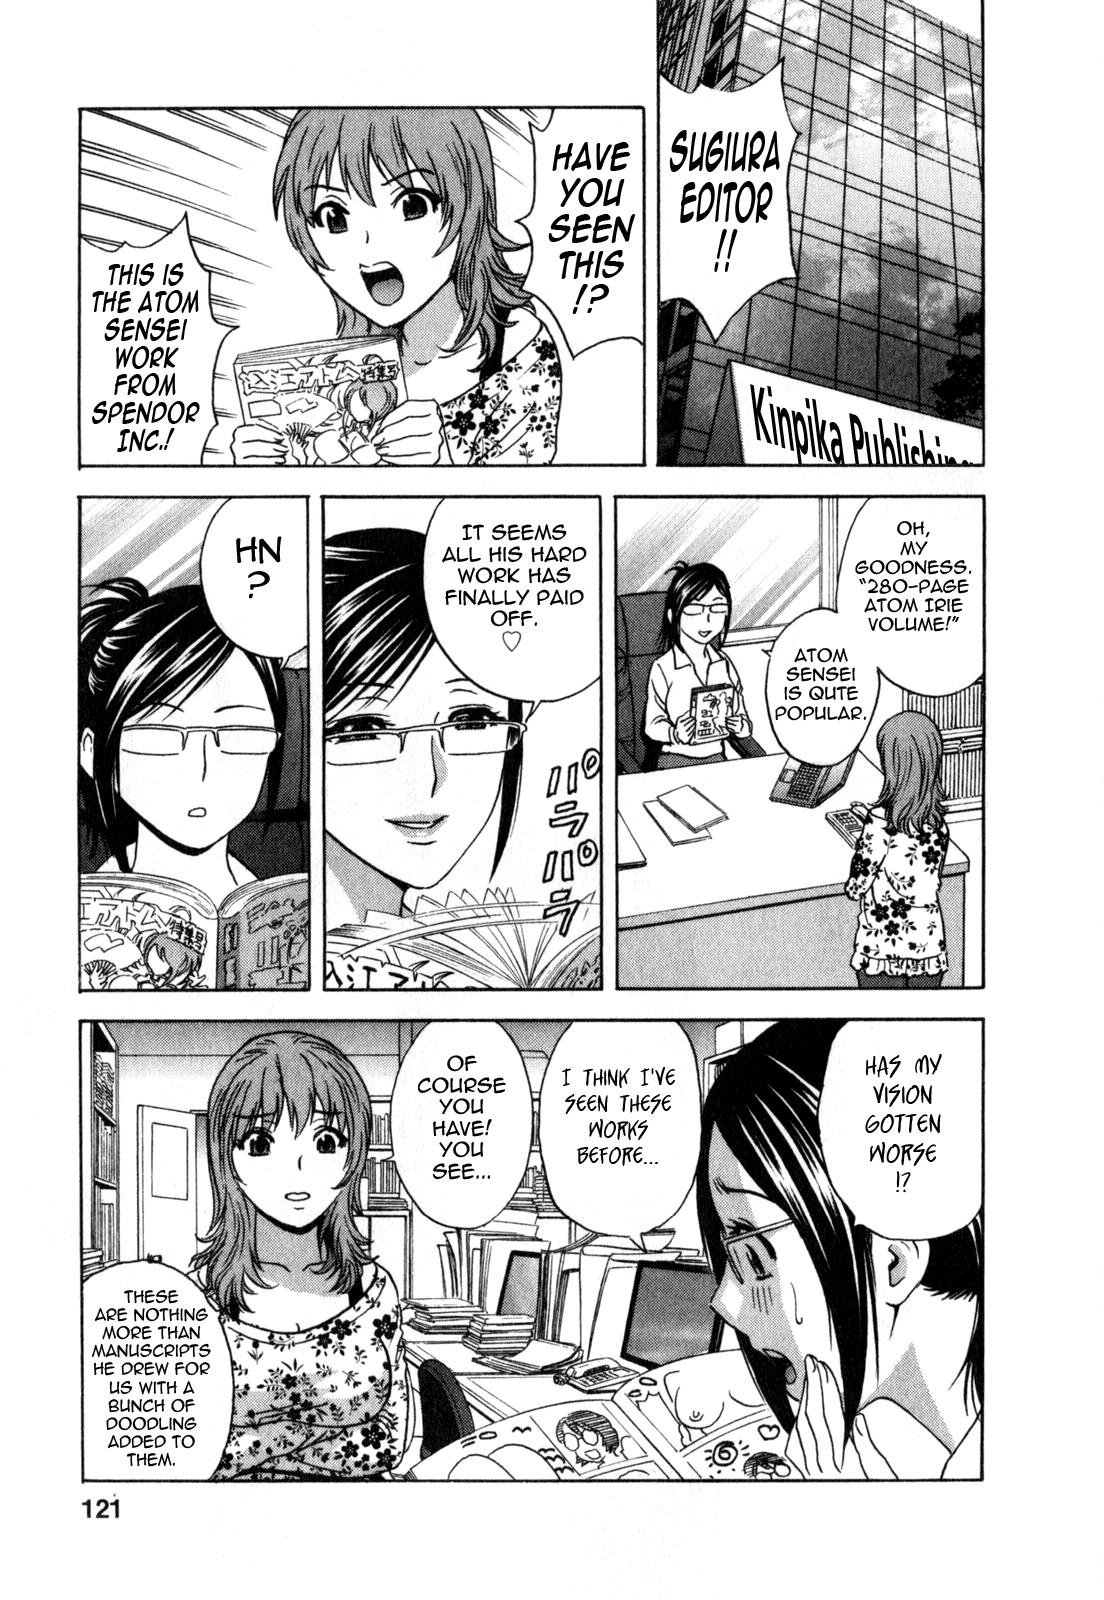 Life with Married Women Just Like a Manga 3 122